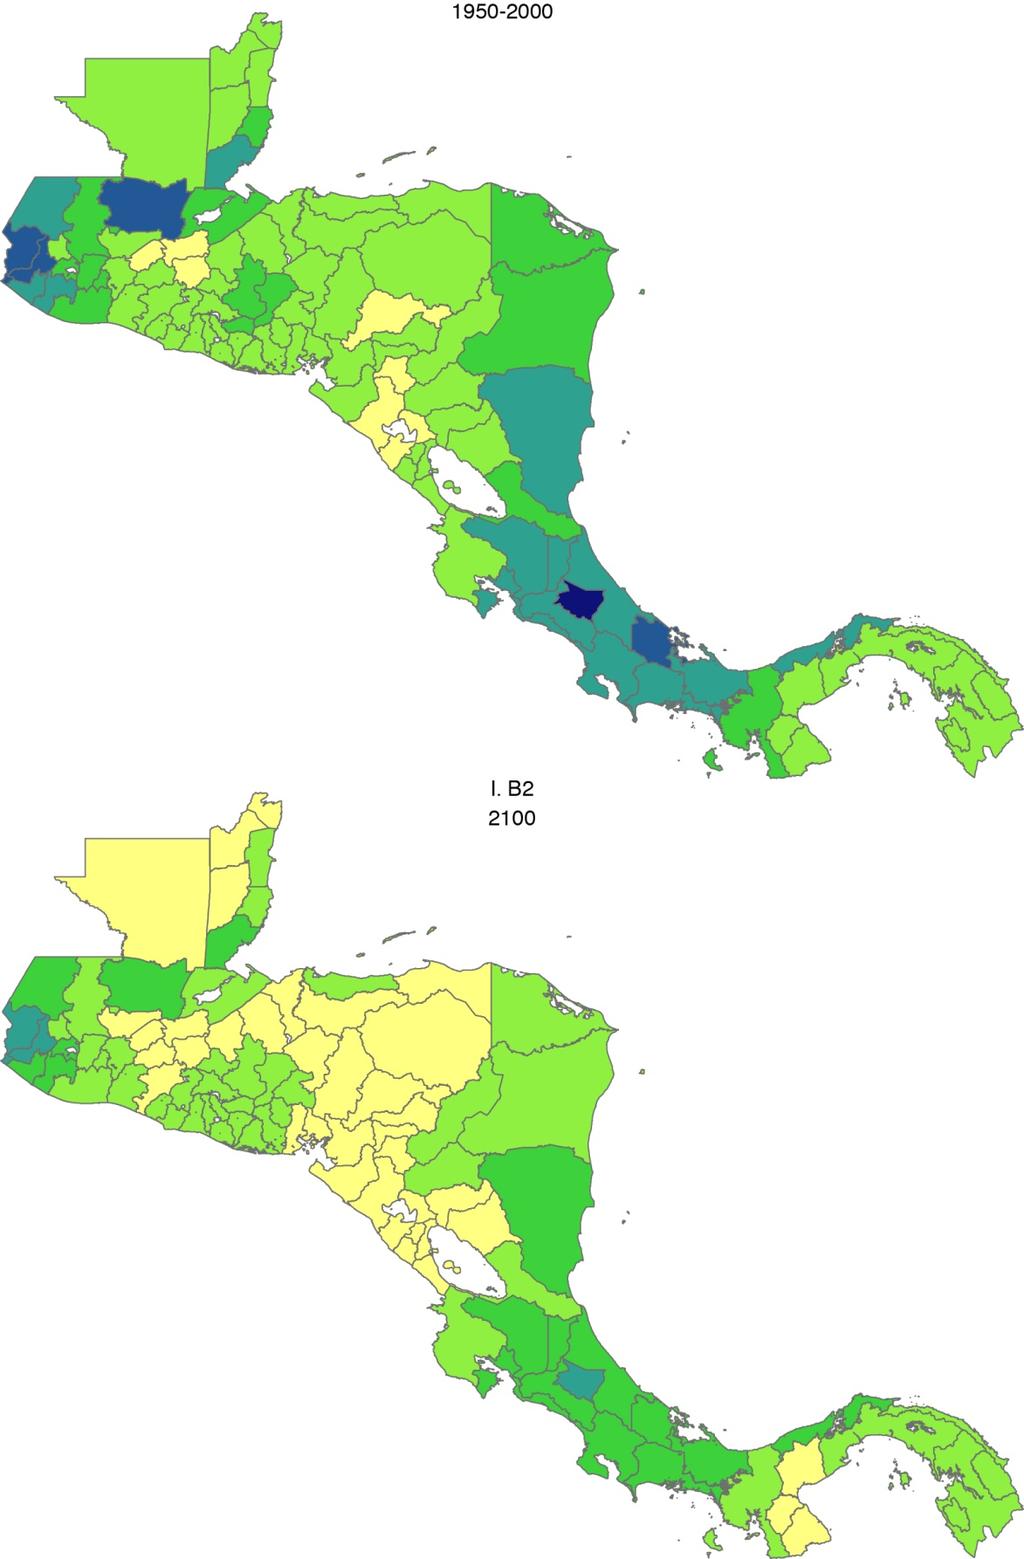 Centroamérica: Índice de aridez histórico y con cambio climático Promedio 1950-2000: 1.